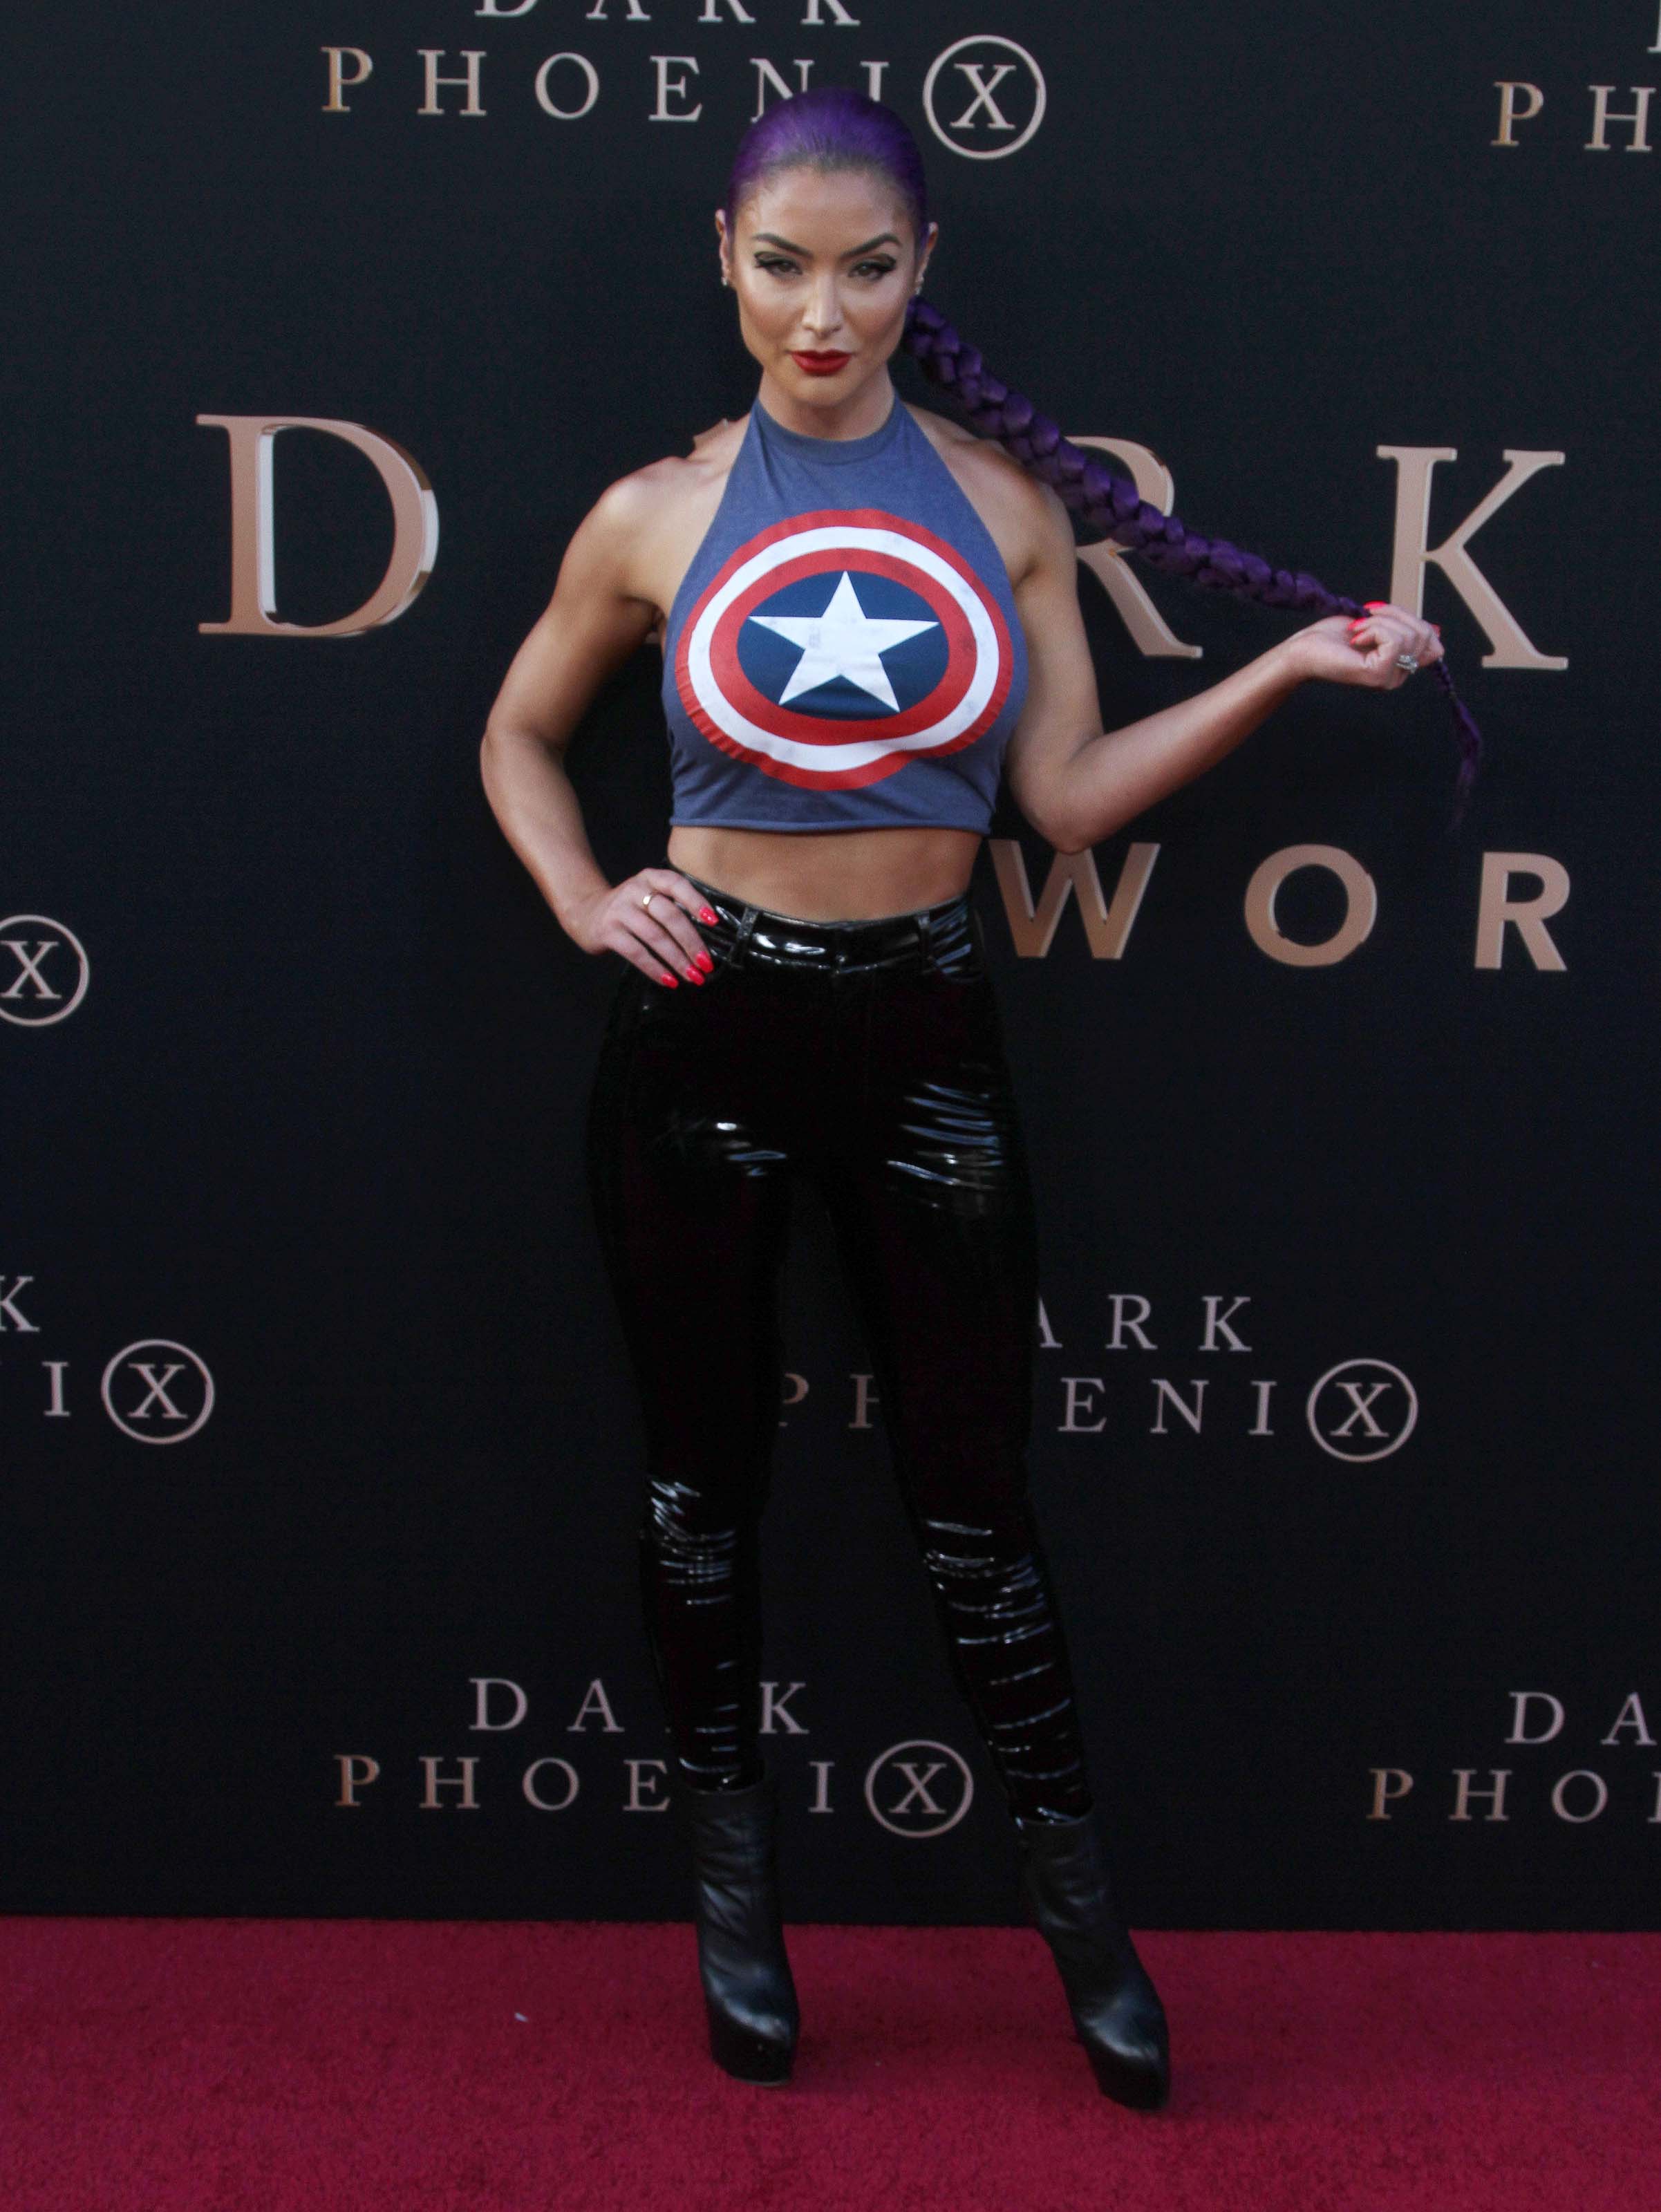 Eva Marie attends X-Men Dark Phoenix film premiere